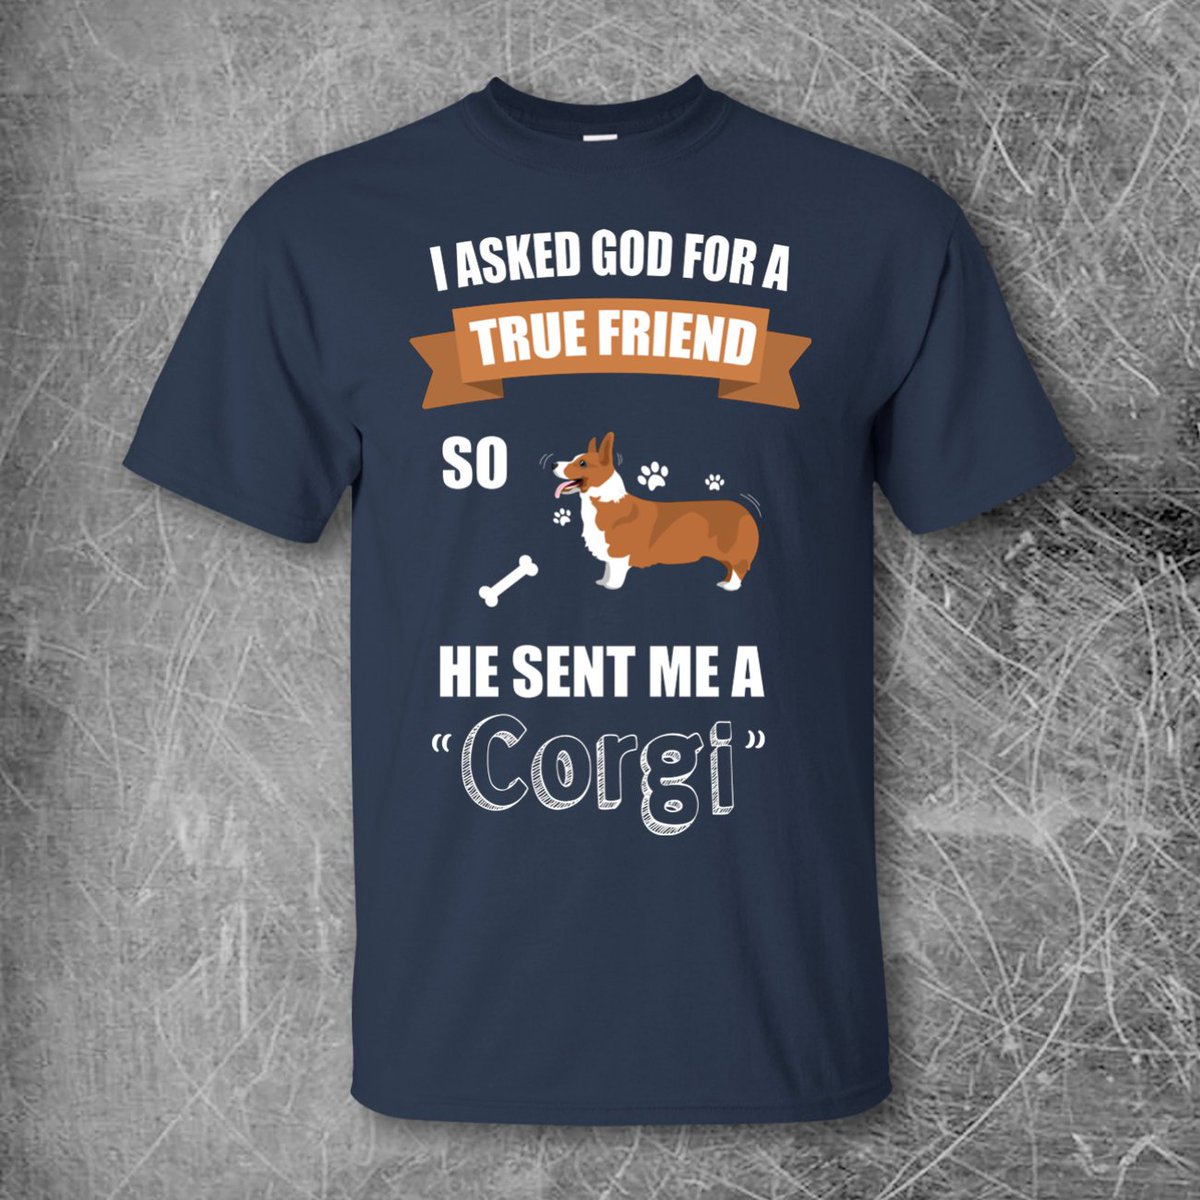 Corgi T Shirt Gifts for Dogs Lovers, Corgi Puppy Tees Birthday Presents etsy.me/2Nl1KRx #corgit-shirt #corgishirt #corgitee #corgiteeshirt #corgitshirt #corgit-shirts #corgishirts #corgitees #corgiteeshirts #corgitshirts #corgitshirt #corgitshirts